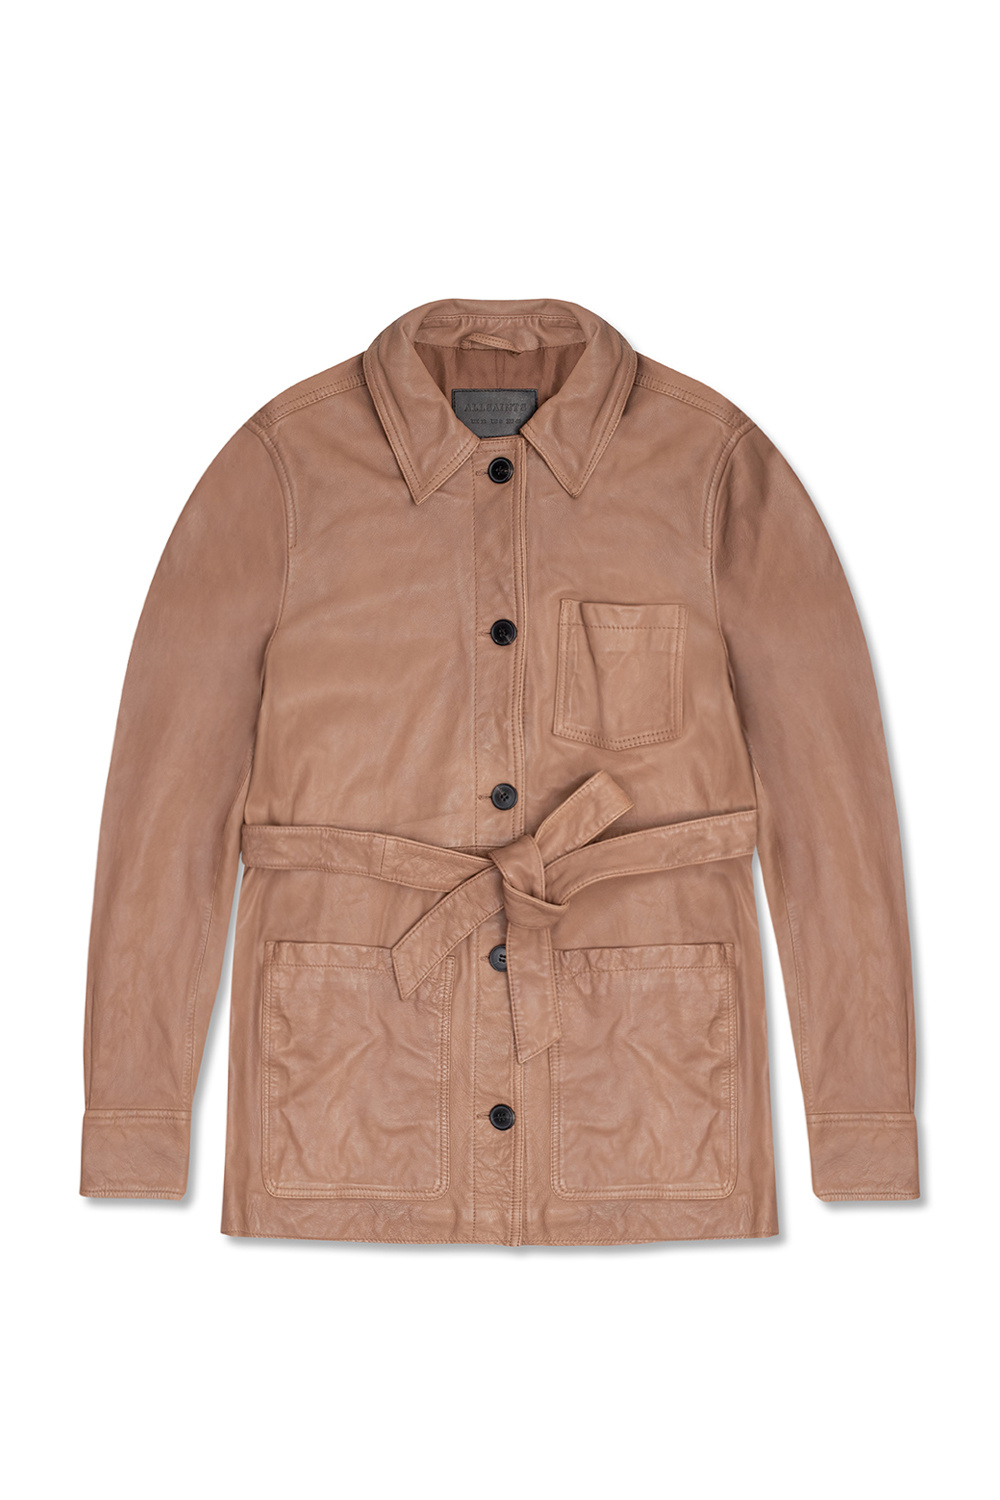 AllSaints ‘Eve’ leather Yrs jacket